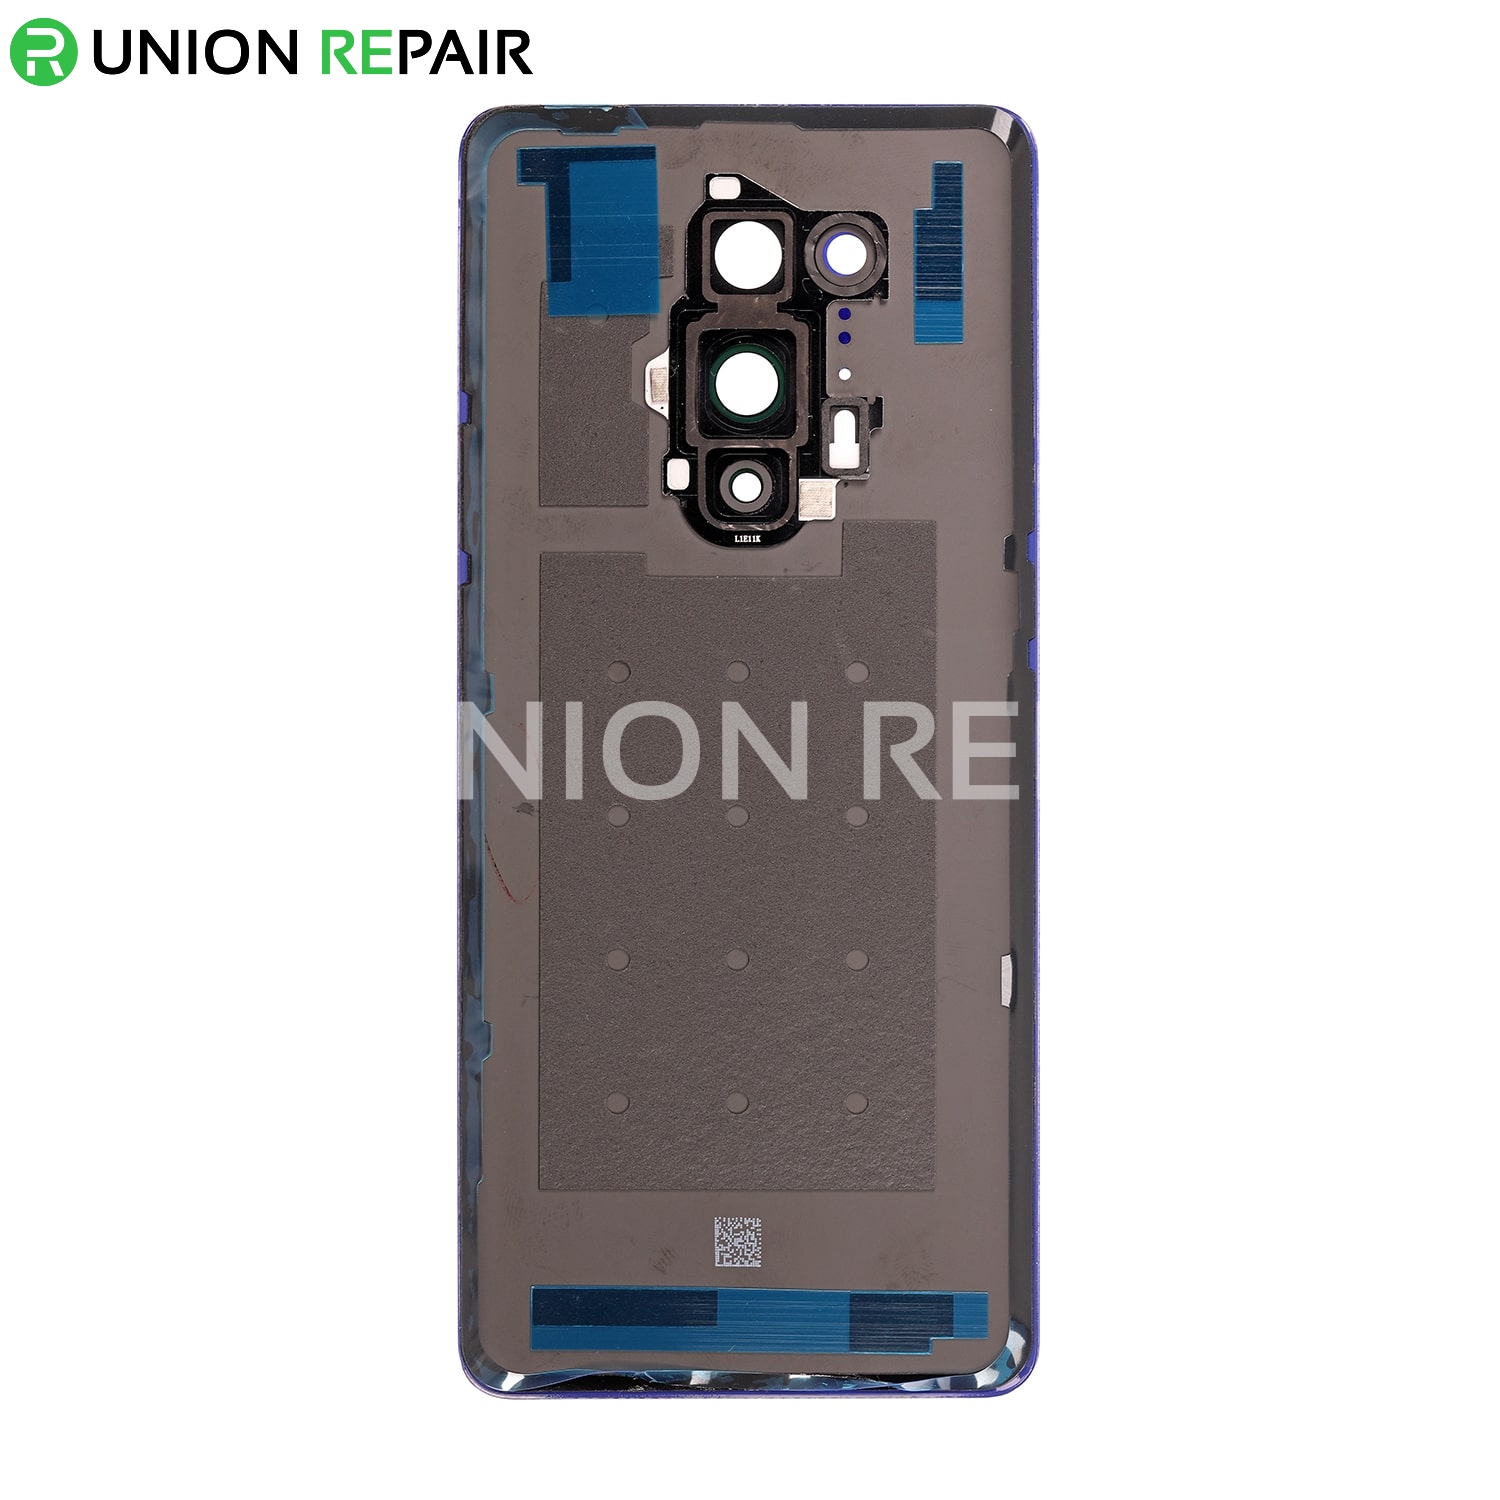 Replacement for OnePlus 8 Pro Battery Door - Ultramarine Blue